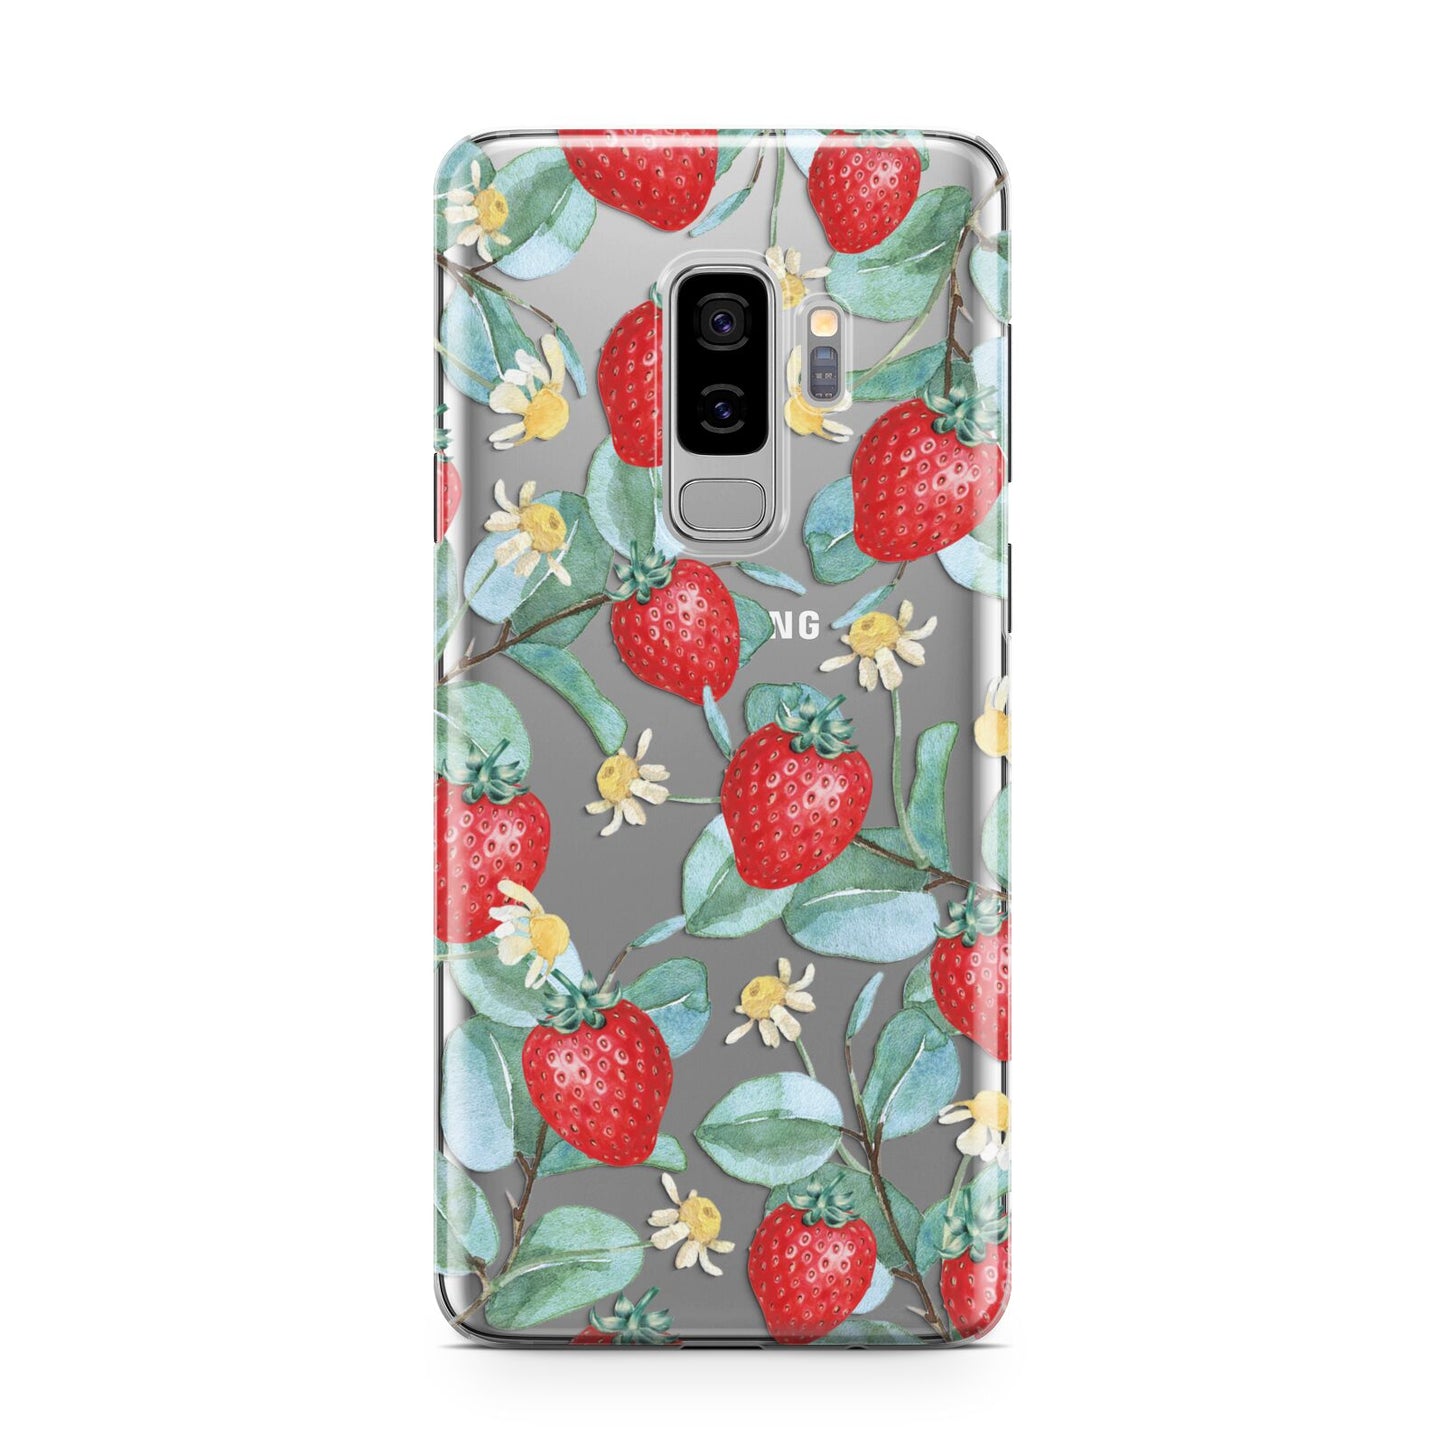 Strawberry Plant Samsung Galaxy S9 Plus Case on Silver phone